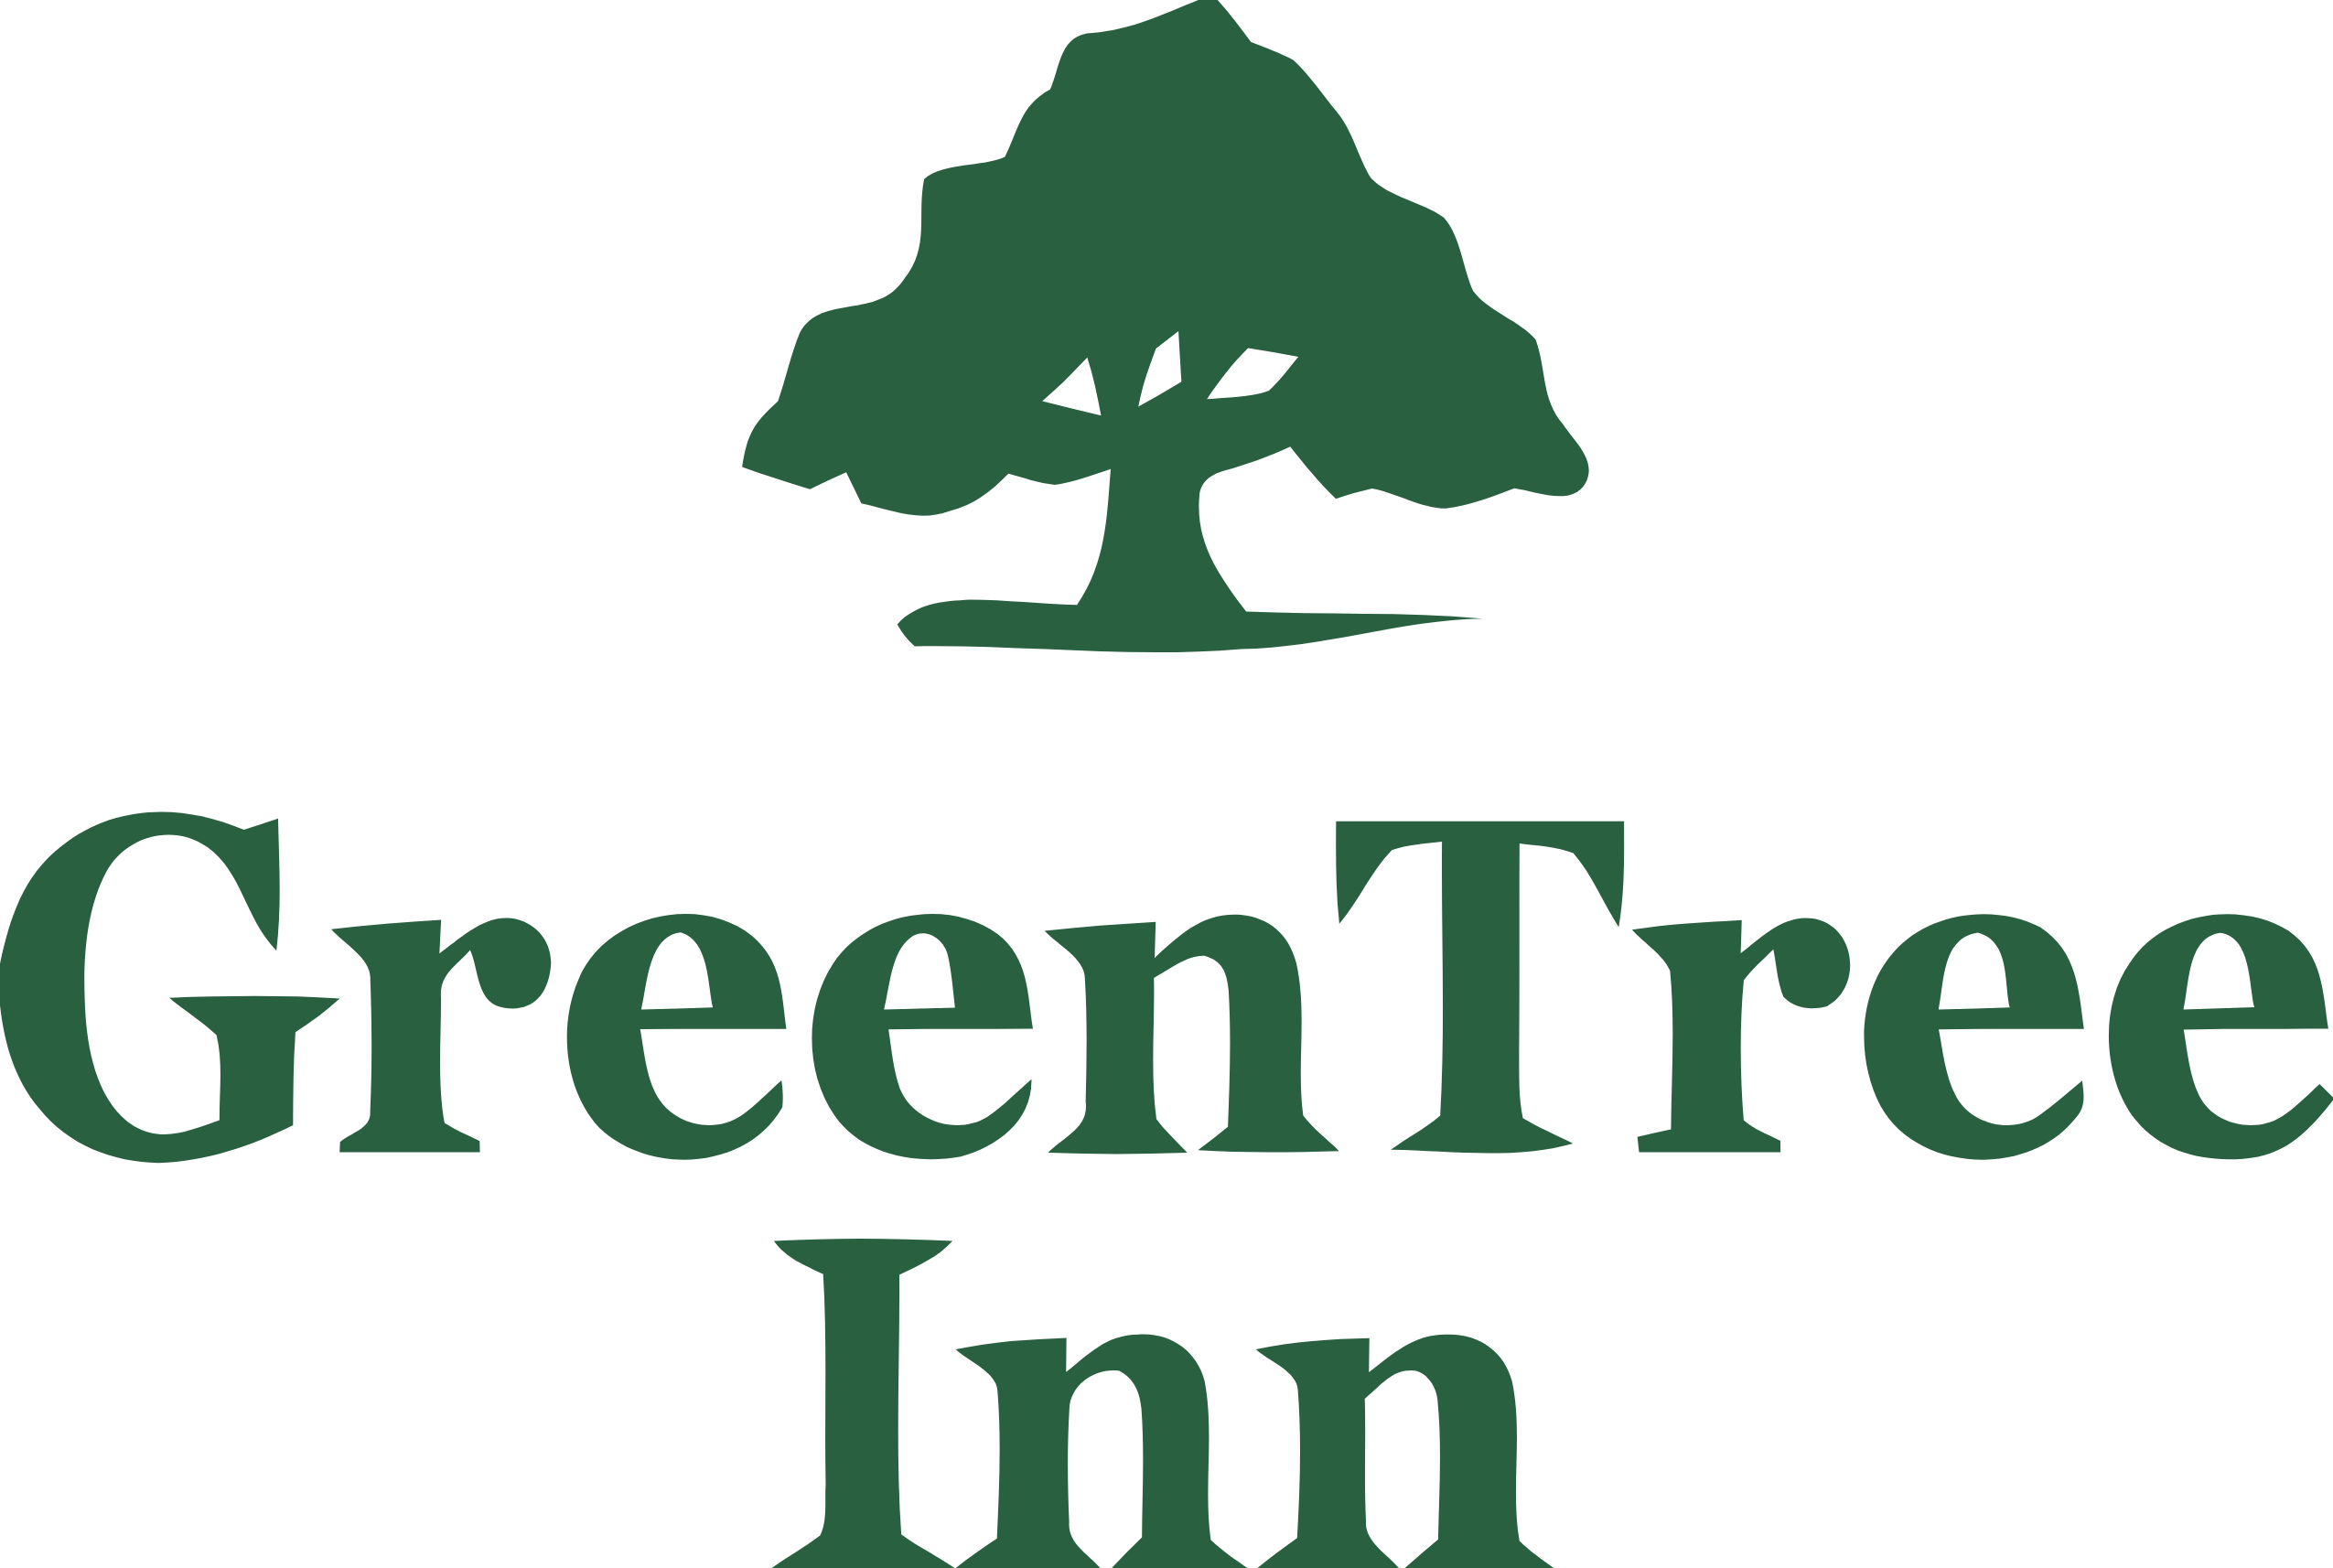 GreenTree Hospitality logo large (transparent PNG)